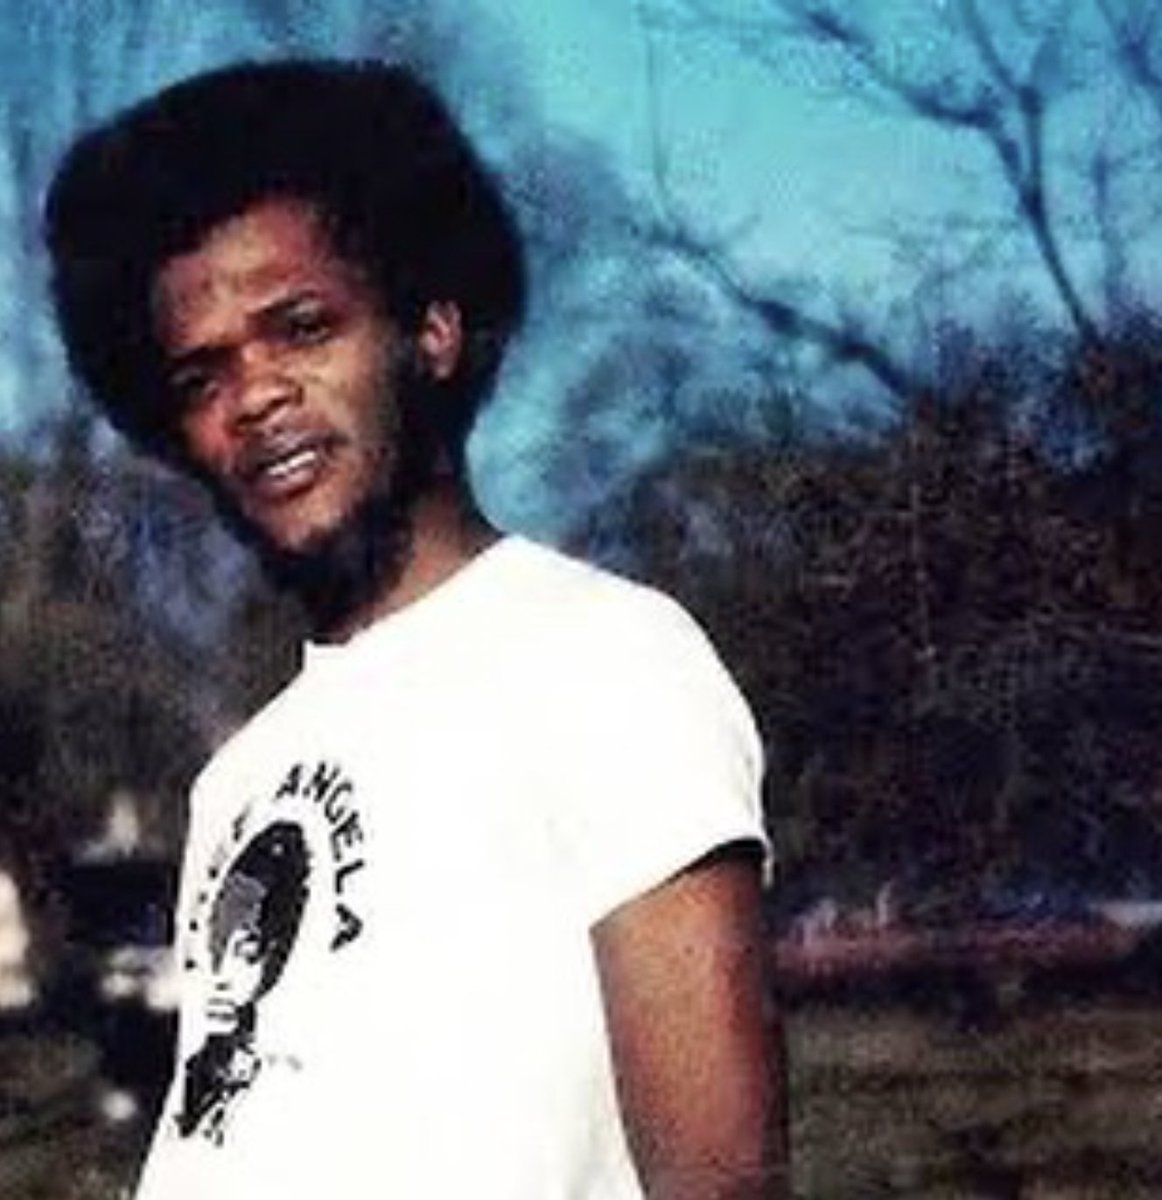 Samuel L Jackson wearing a Free Angela Davis t-shirt. c.1971 #AngelaDavis #samuelljackson